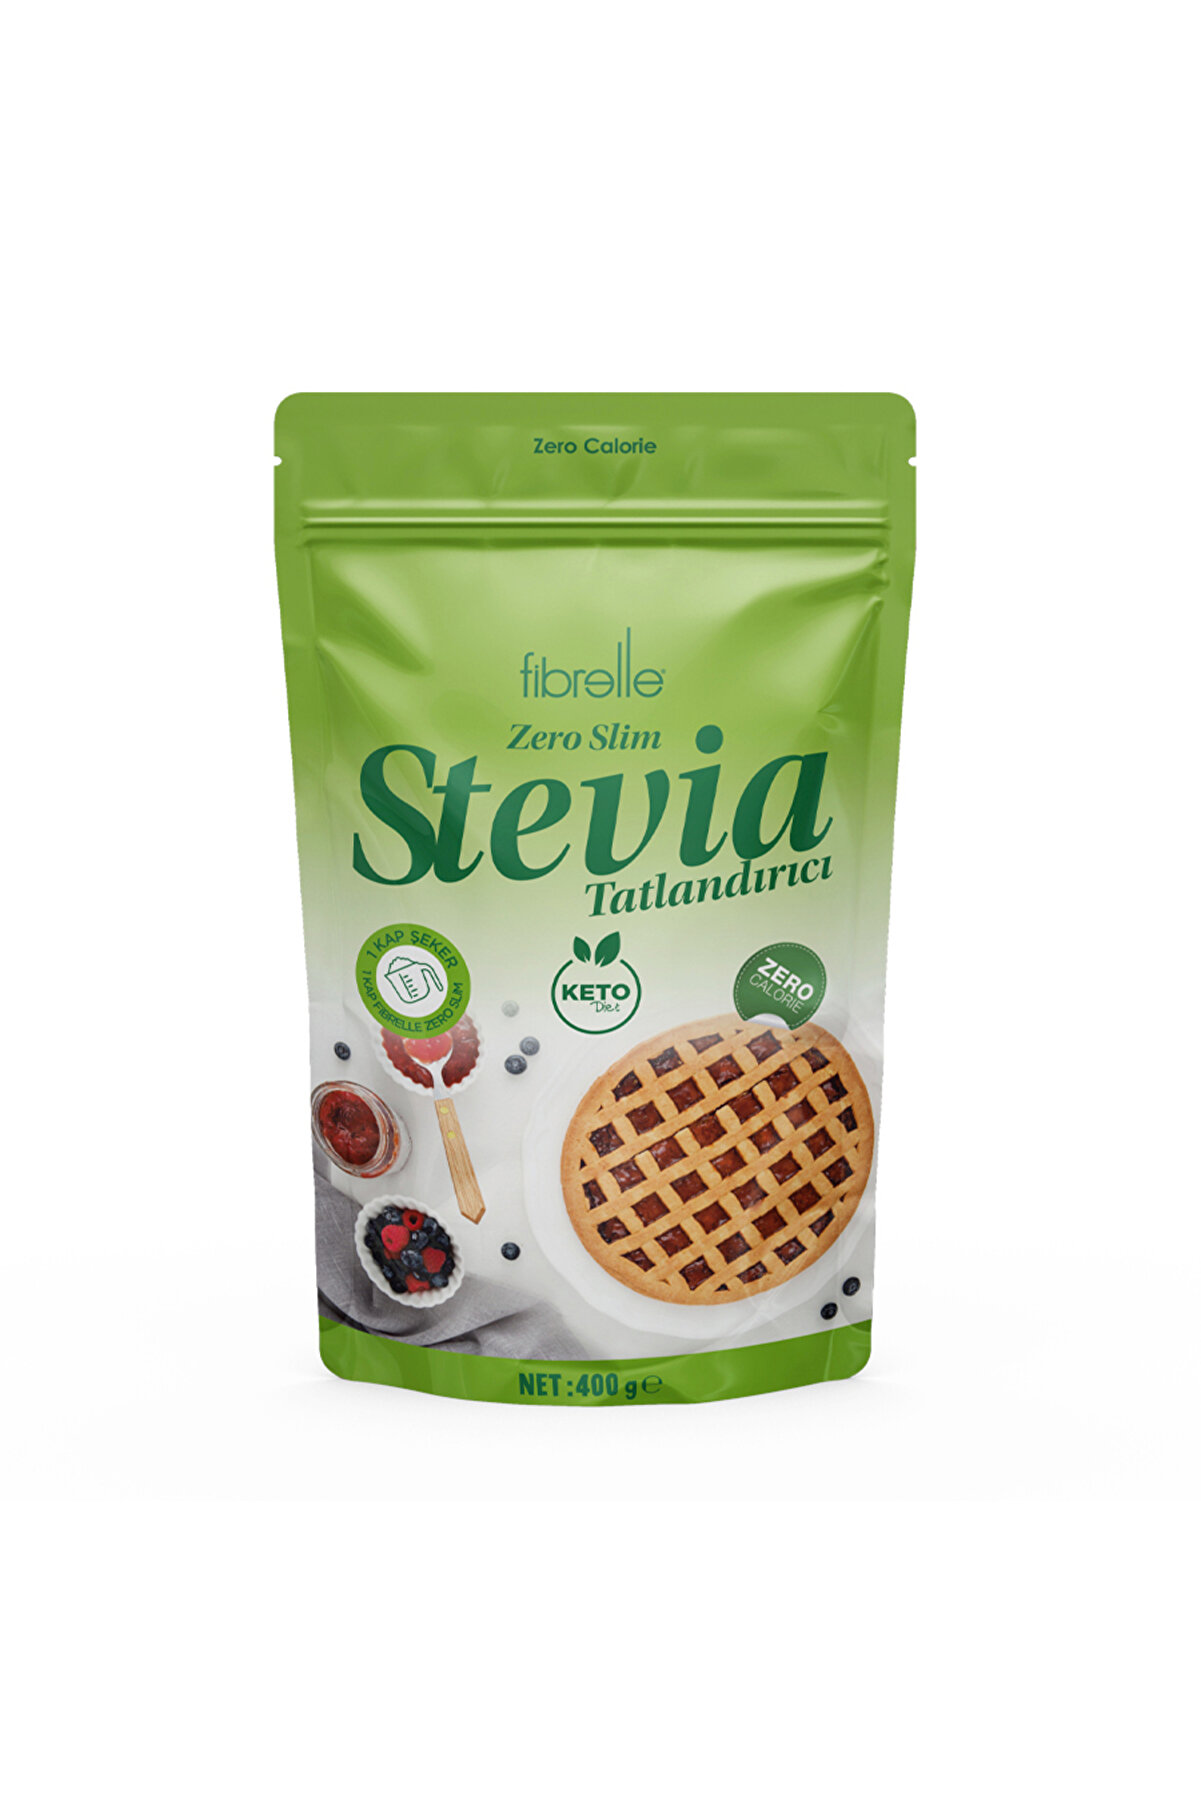 Fibrelle Zero Slim Stevia 400 G Toz Tatlandırıcı / Ketojenik / Sıfır Kalori /